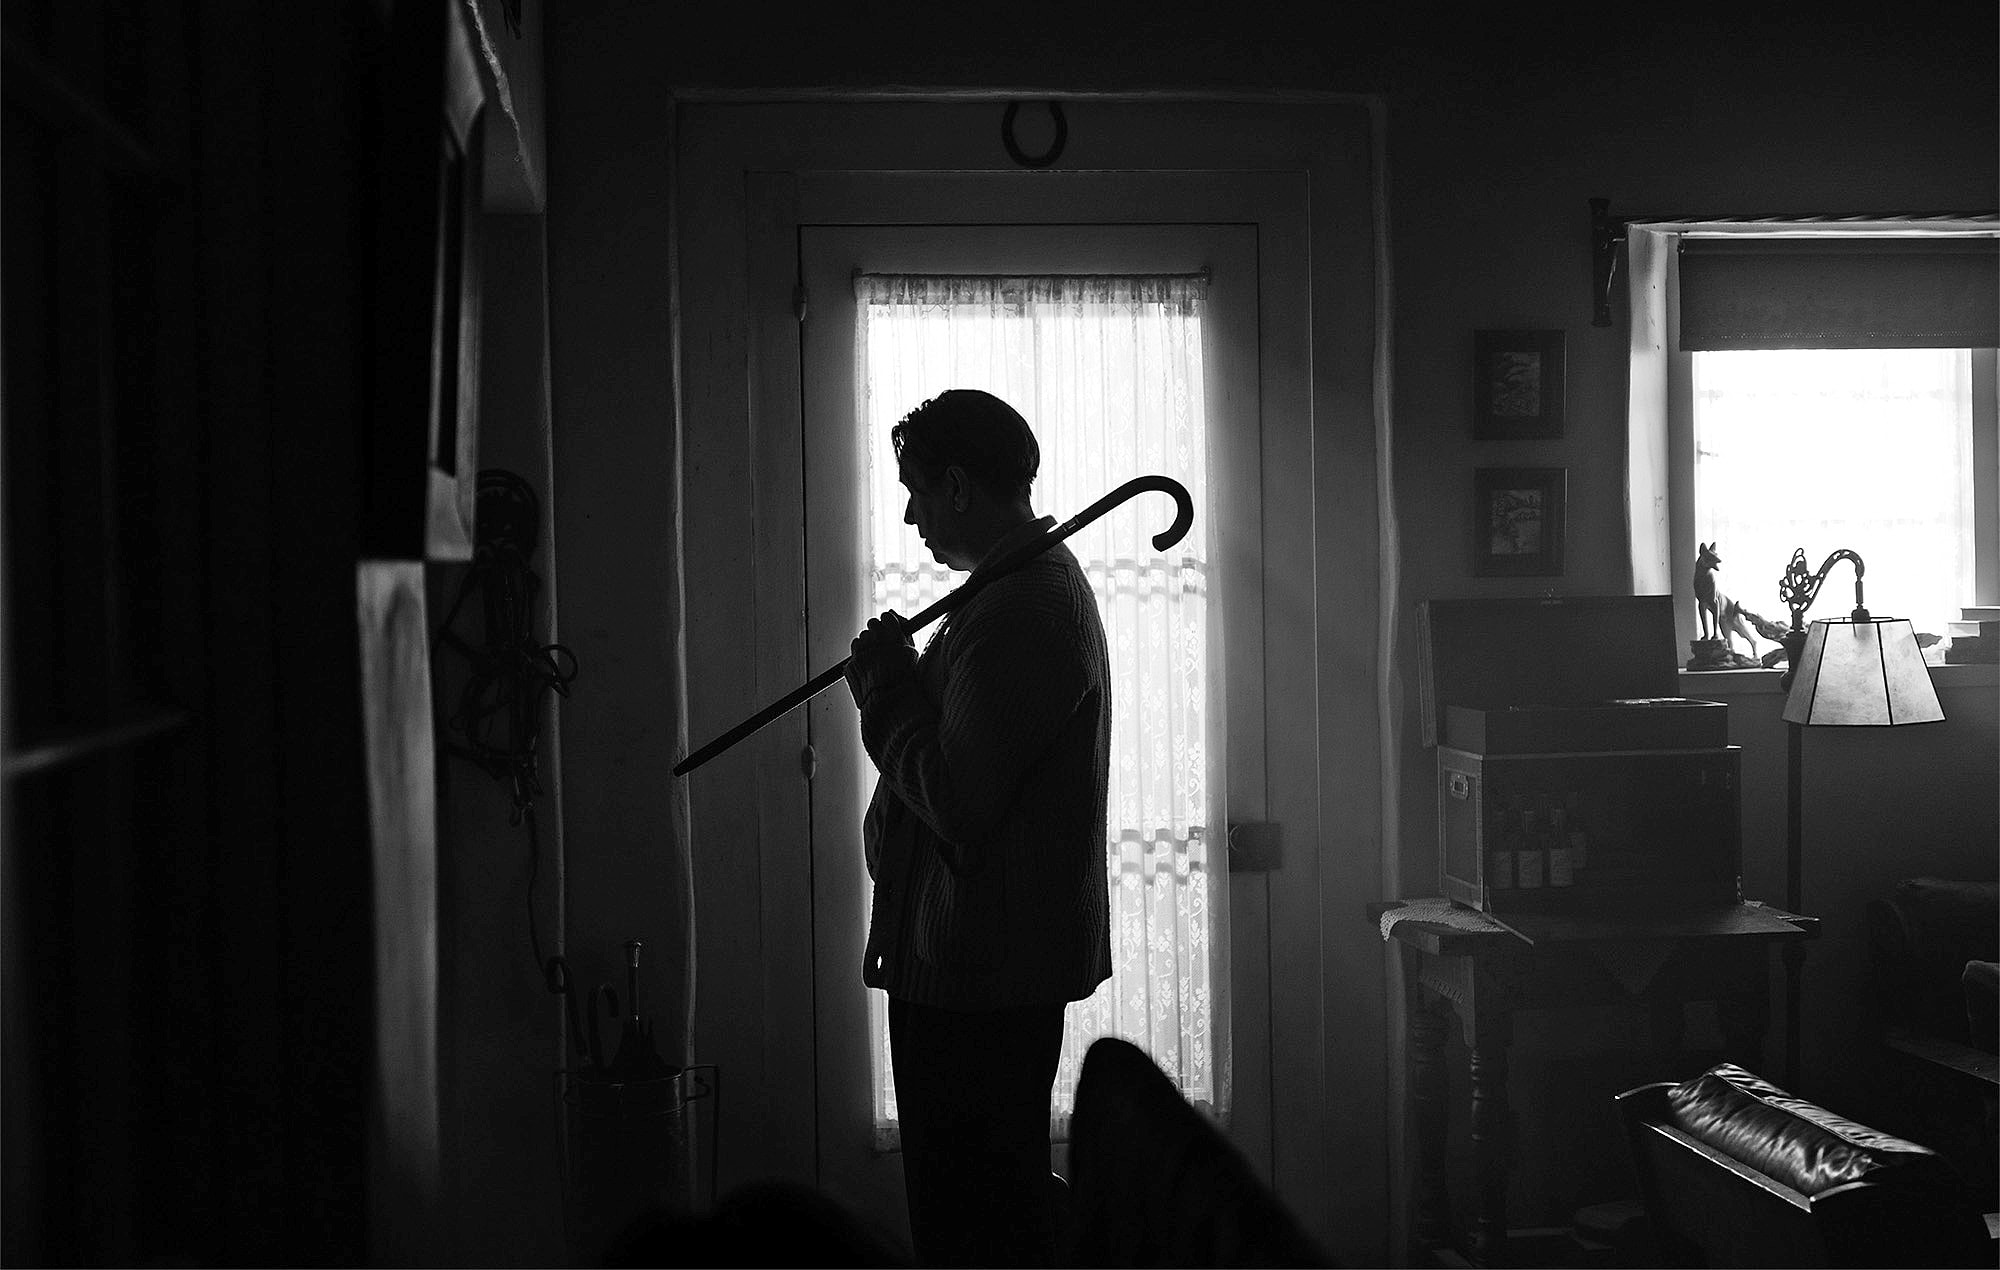 גארי אולדמן בסרט "מאנק", בבימויו של דיוויד פינצ'ר (צילום: Gisele Schmidt/Netflix)